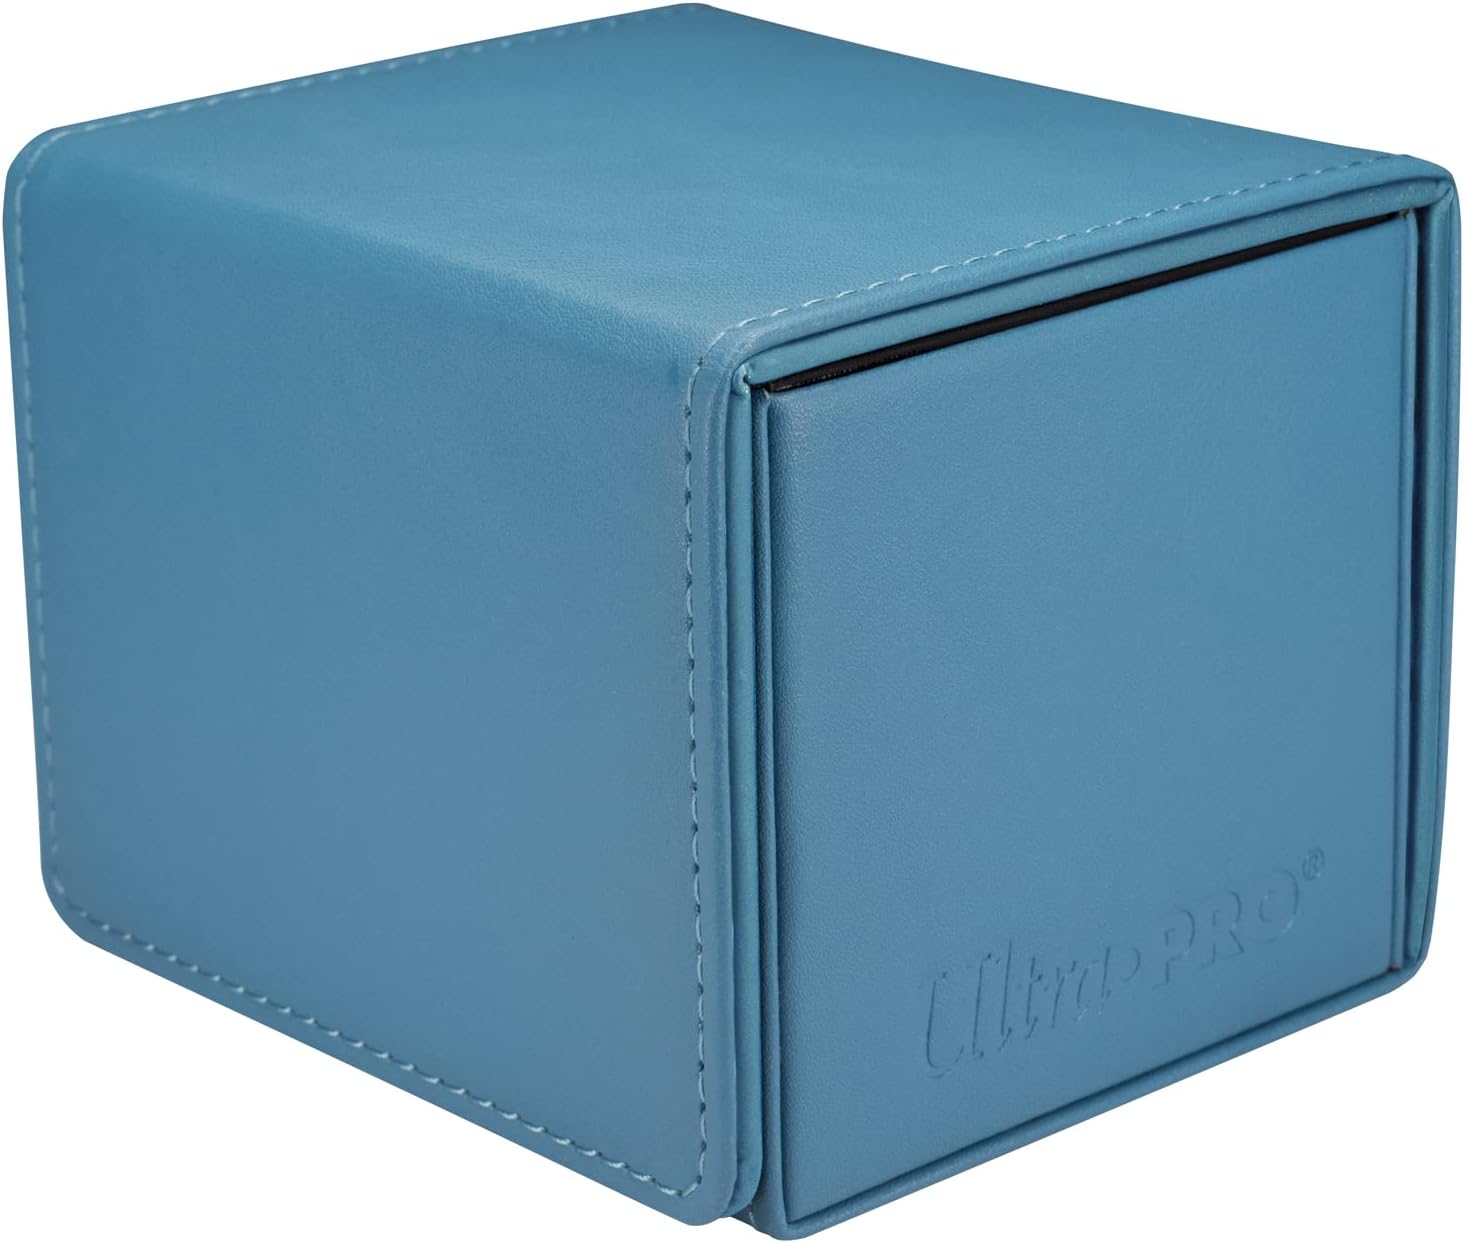 ULTRA PRO DECK BOX: VIVID EDGE TEAL